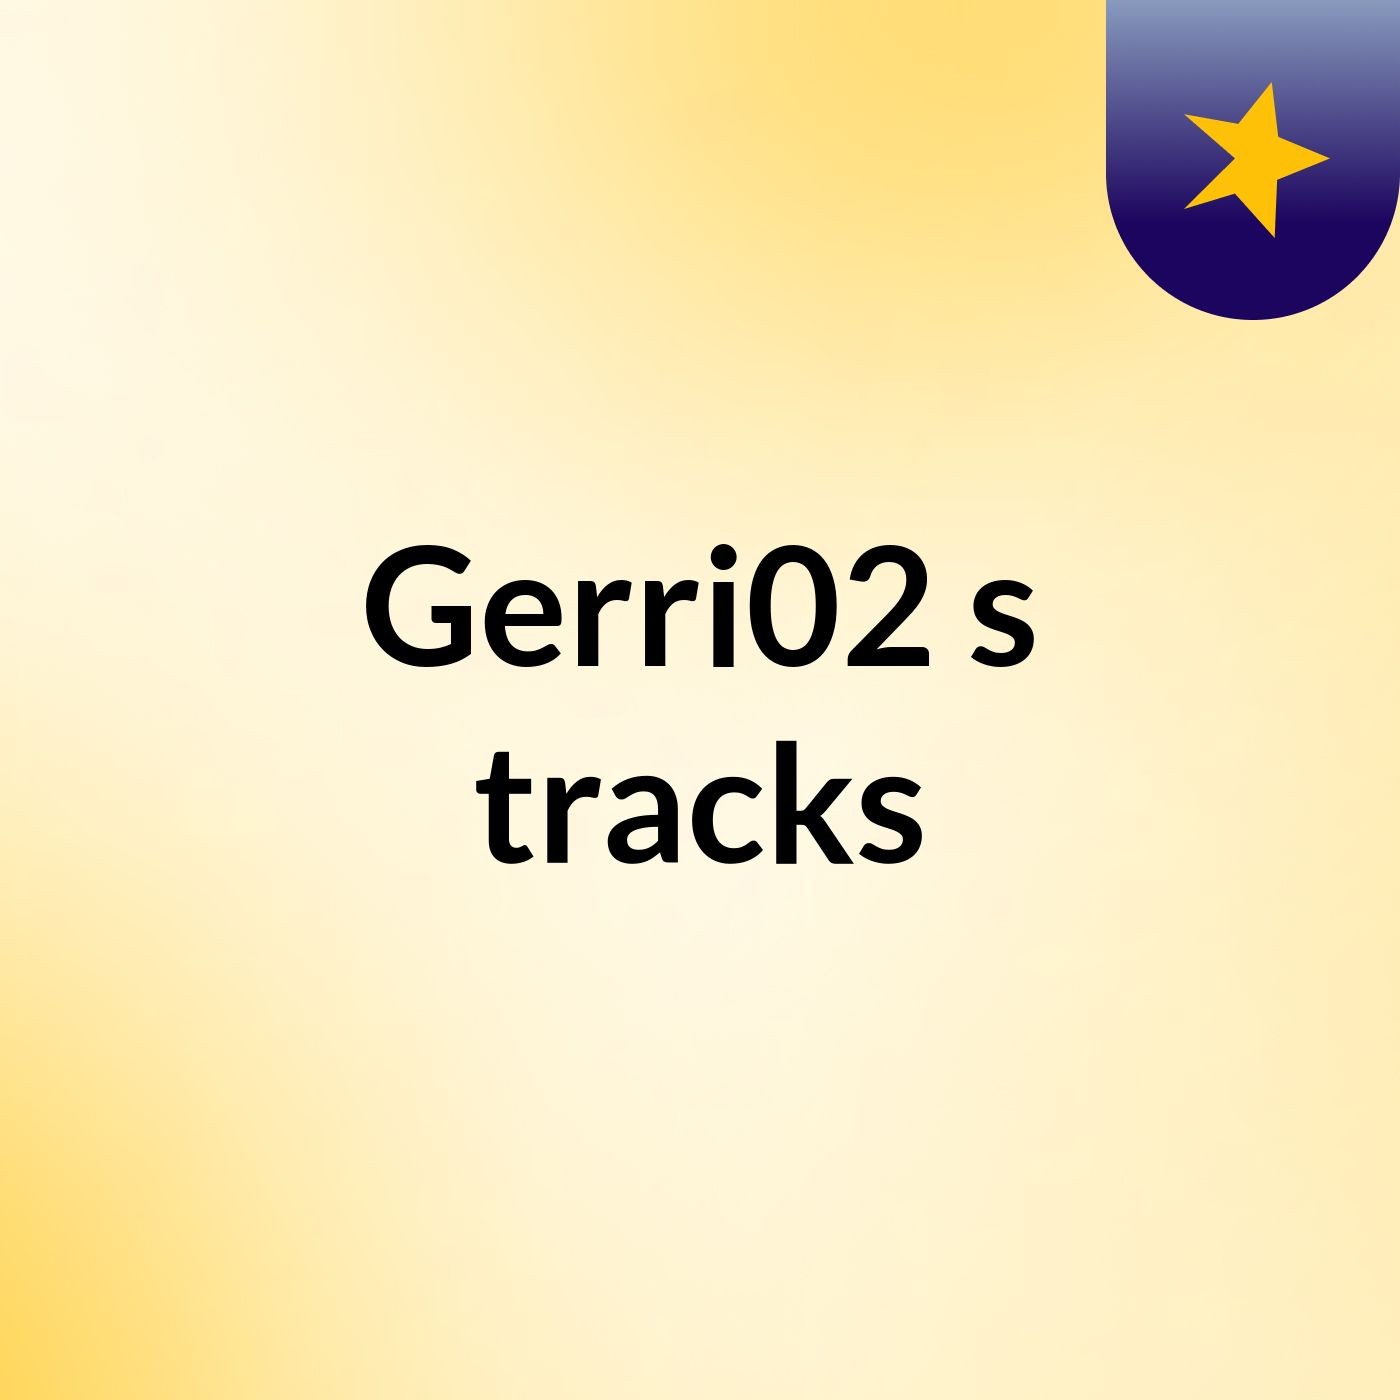 Gerri02's tracks